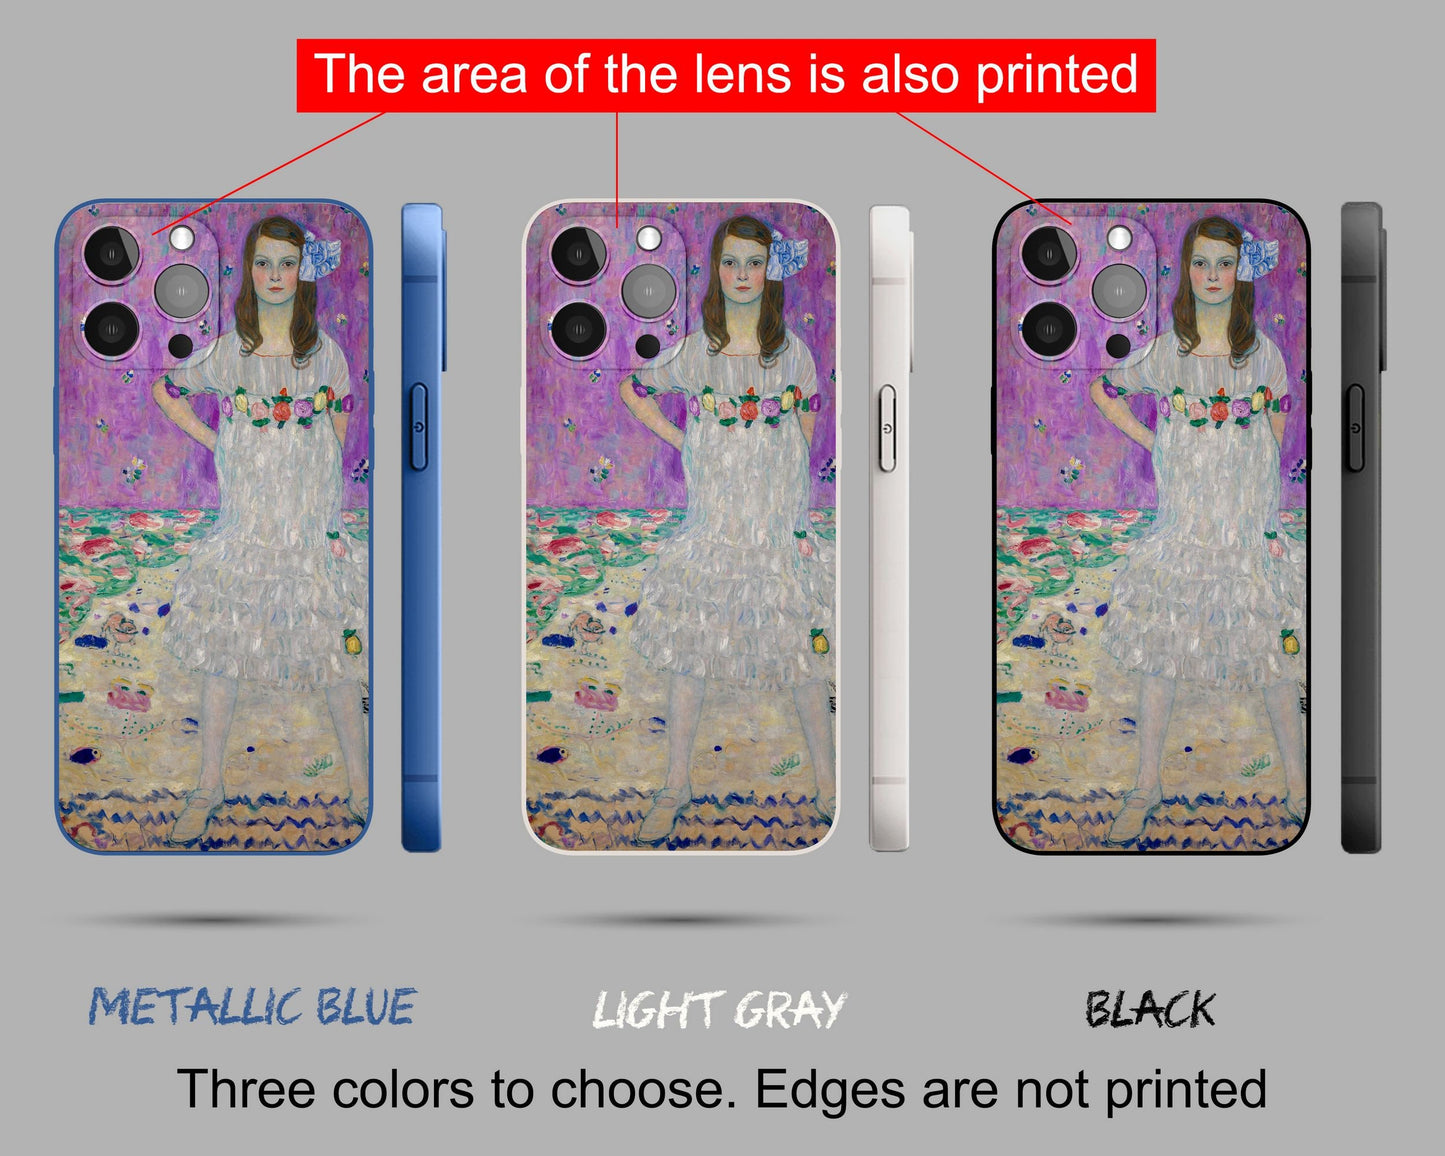 Iphone Case Of Gustav Klimt Painting Putrid Primavesi, Iphone 13 Pro Max, Iphone Se 2020 Case, Iphone Case Protective, Iphone Case Silicone